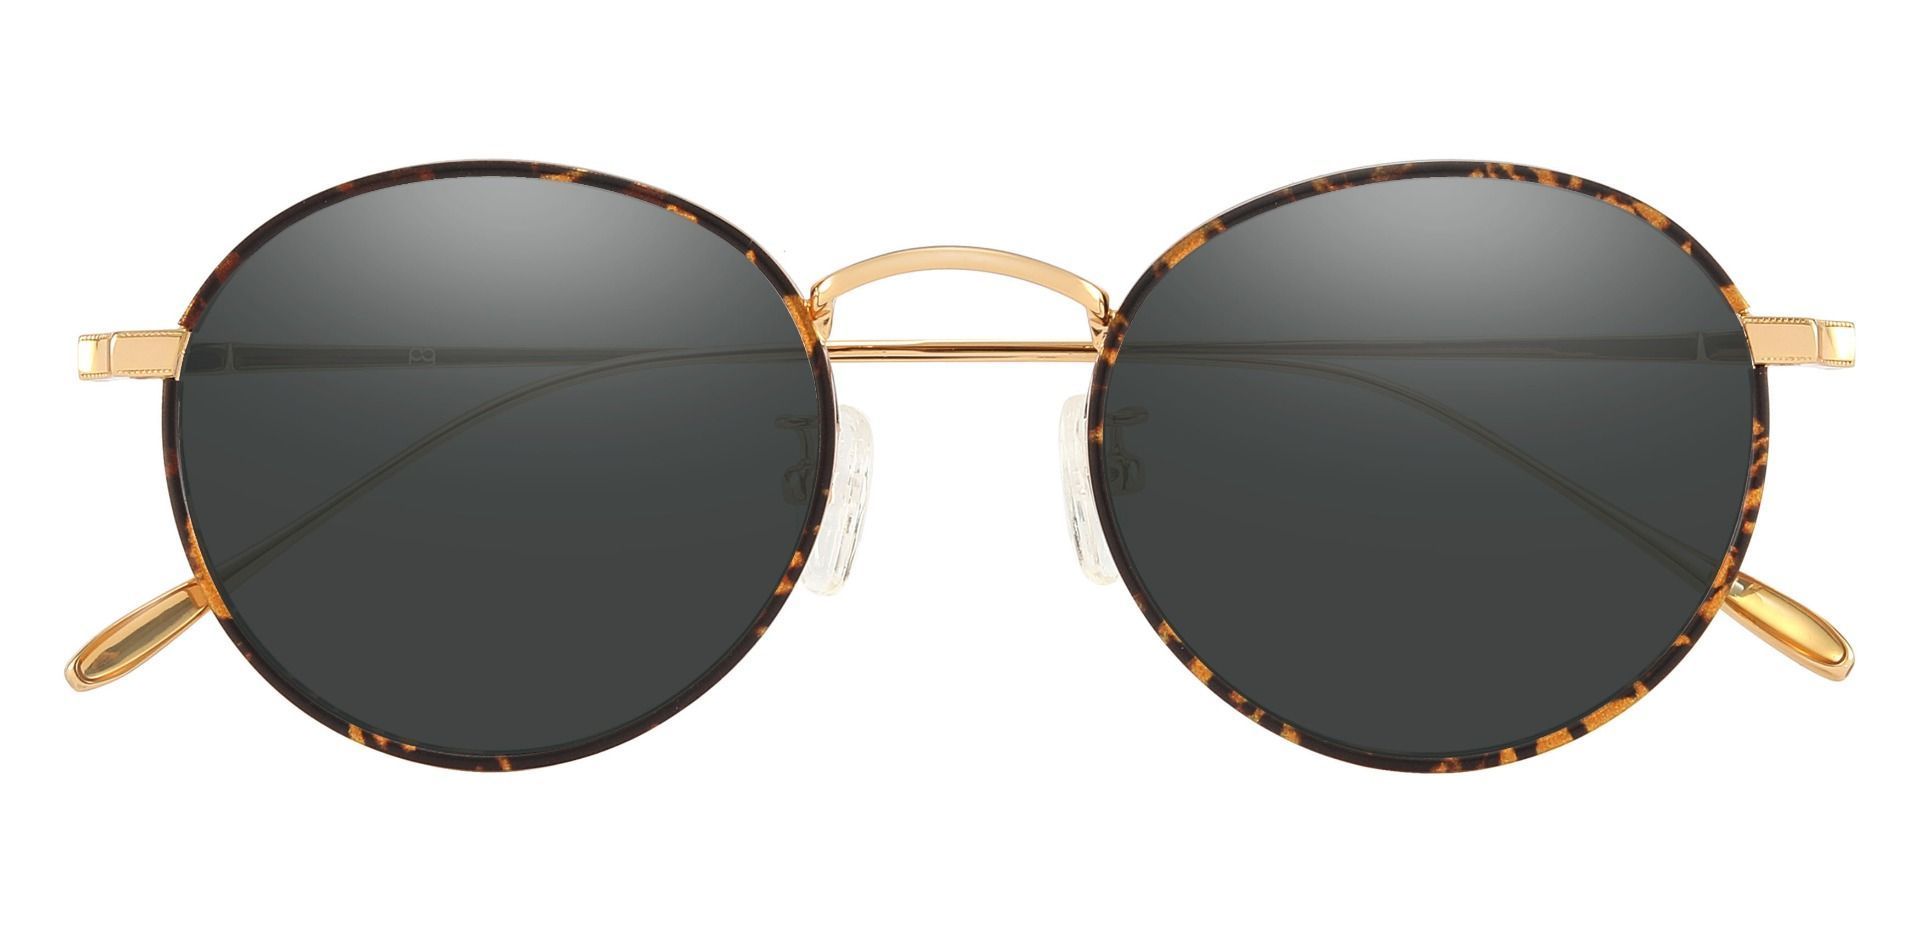 Cornwall Oval Progressive Sunglasses - Tortoise Frame With Gray Lenses